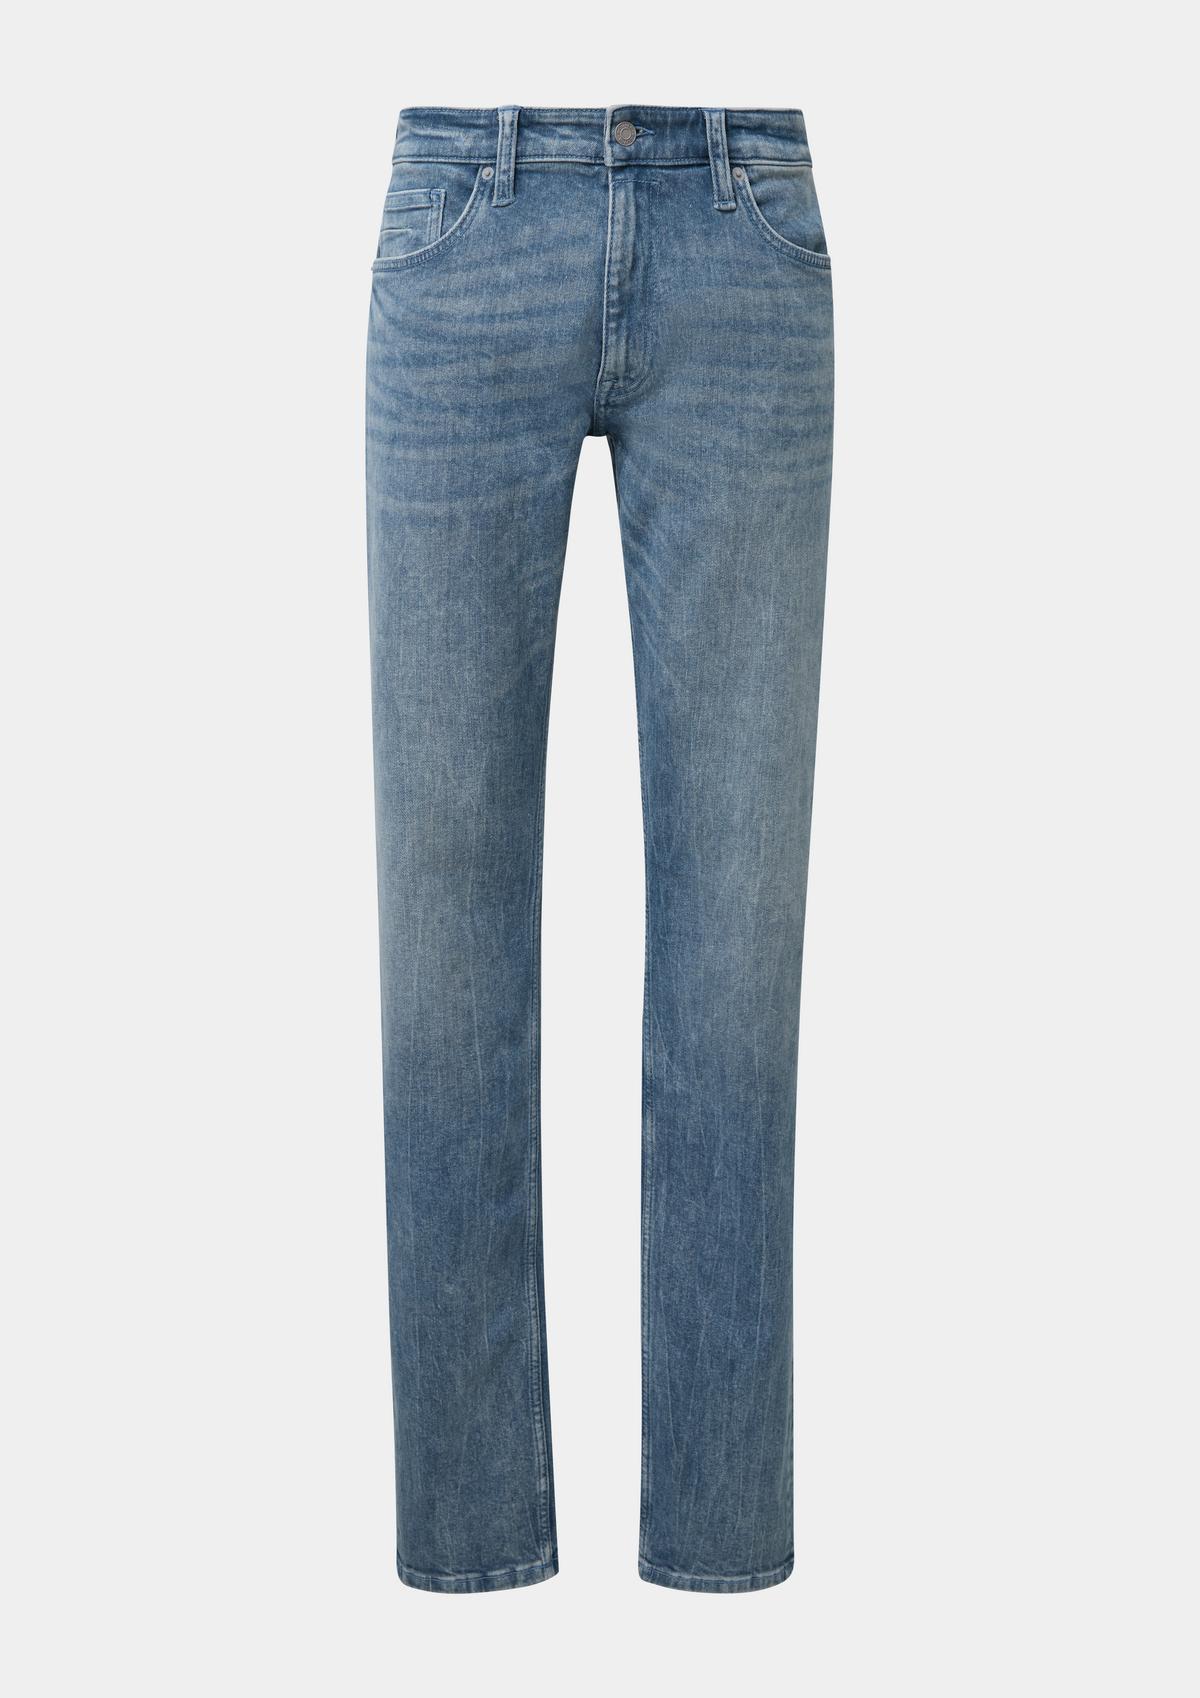 s.Oliver York jeans / regular fit / mid rise / straight leg